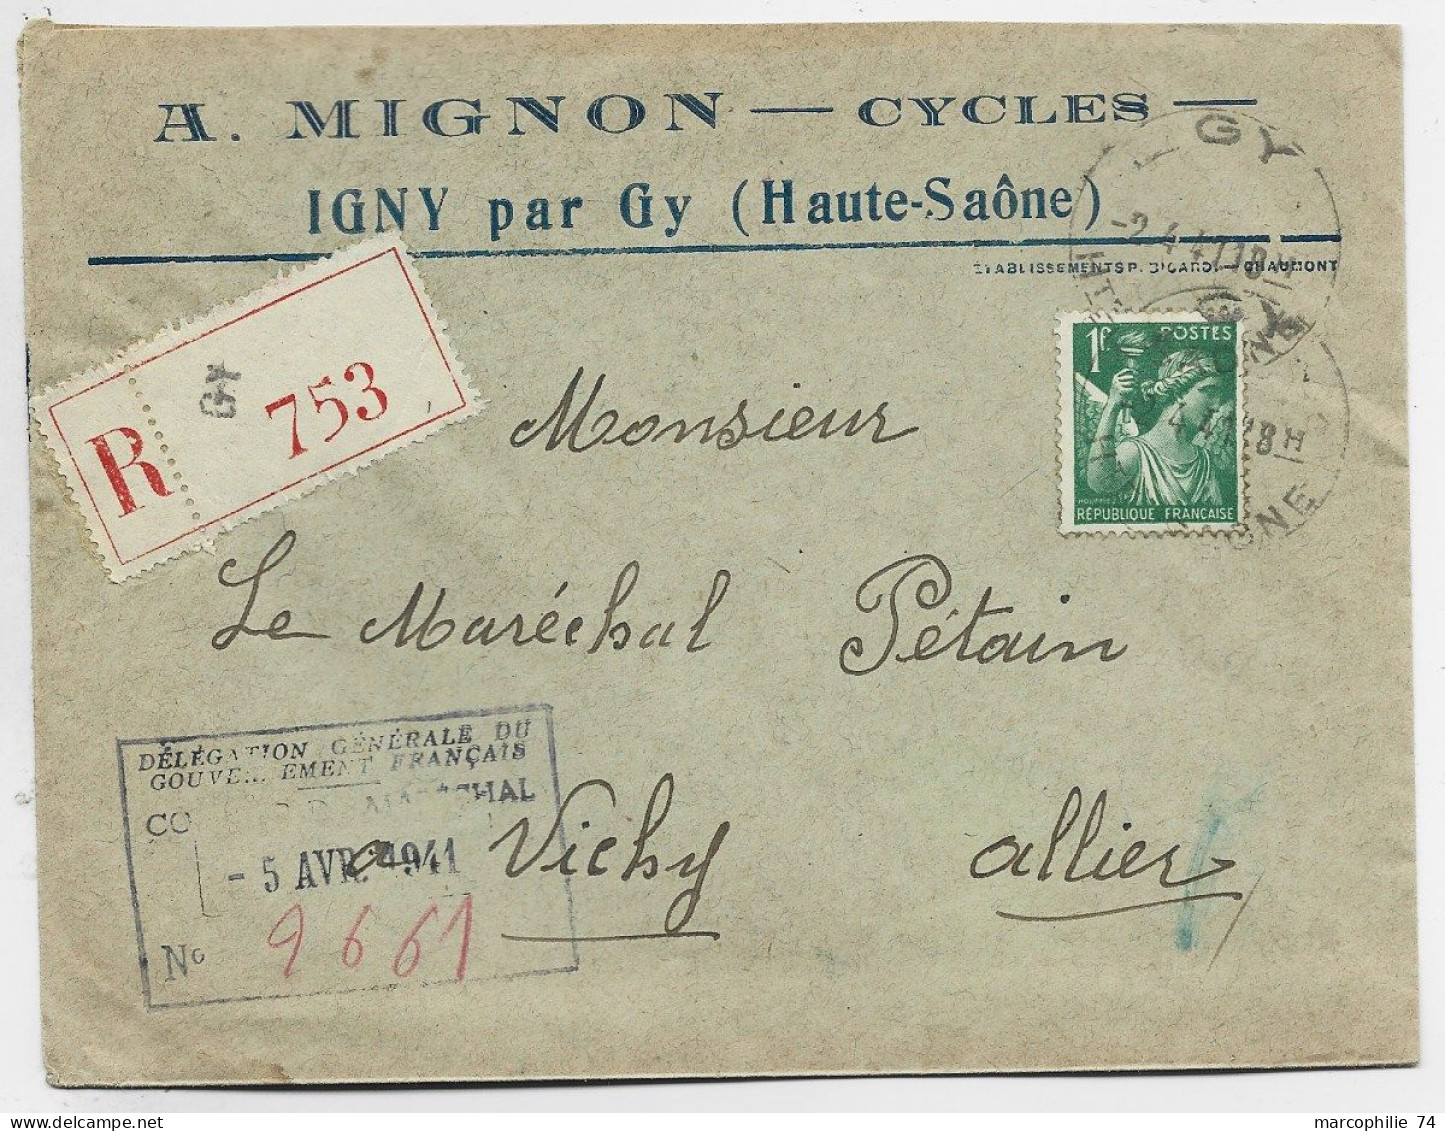 FRANCE IRIS 1FR VERT SEUL LETTRE REC ENTETE MIGNON CYCLES IGNY HAUTE SAONE 1941 POUR MARECHAL PETAIN A VICHY + GRIFFE - 1939-44 Iris